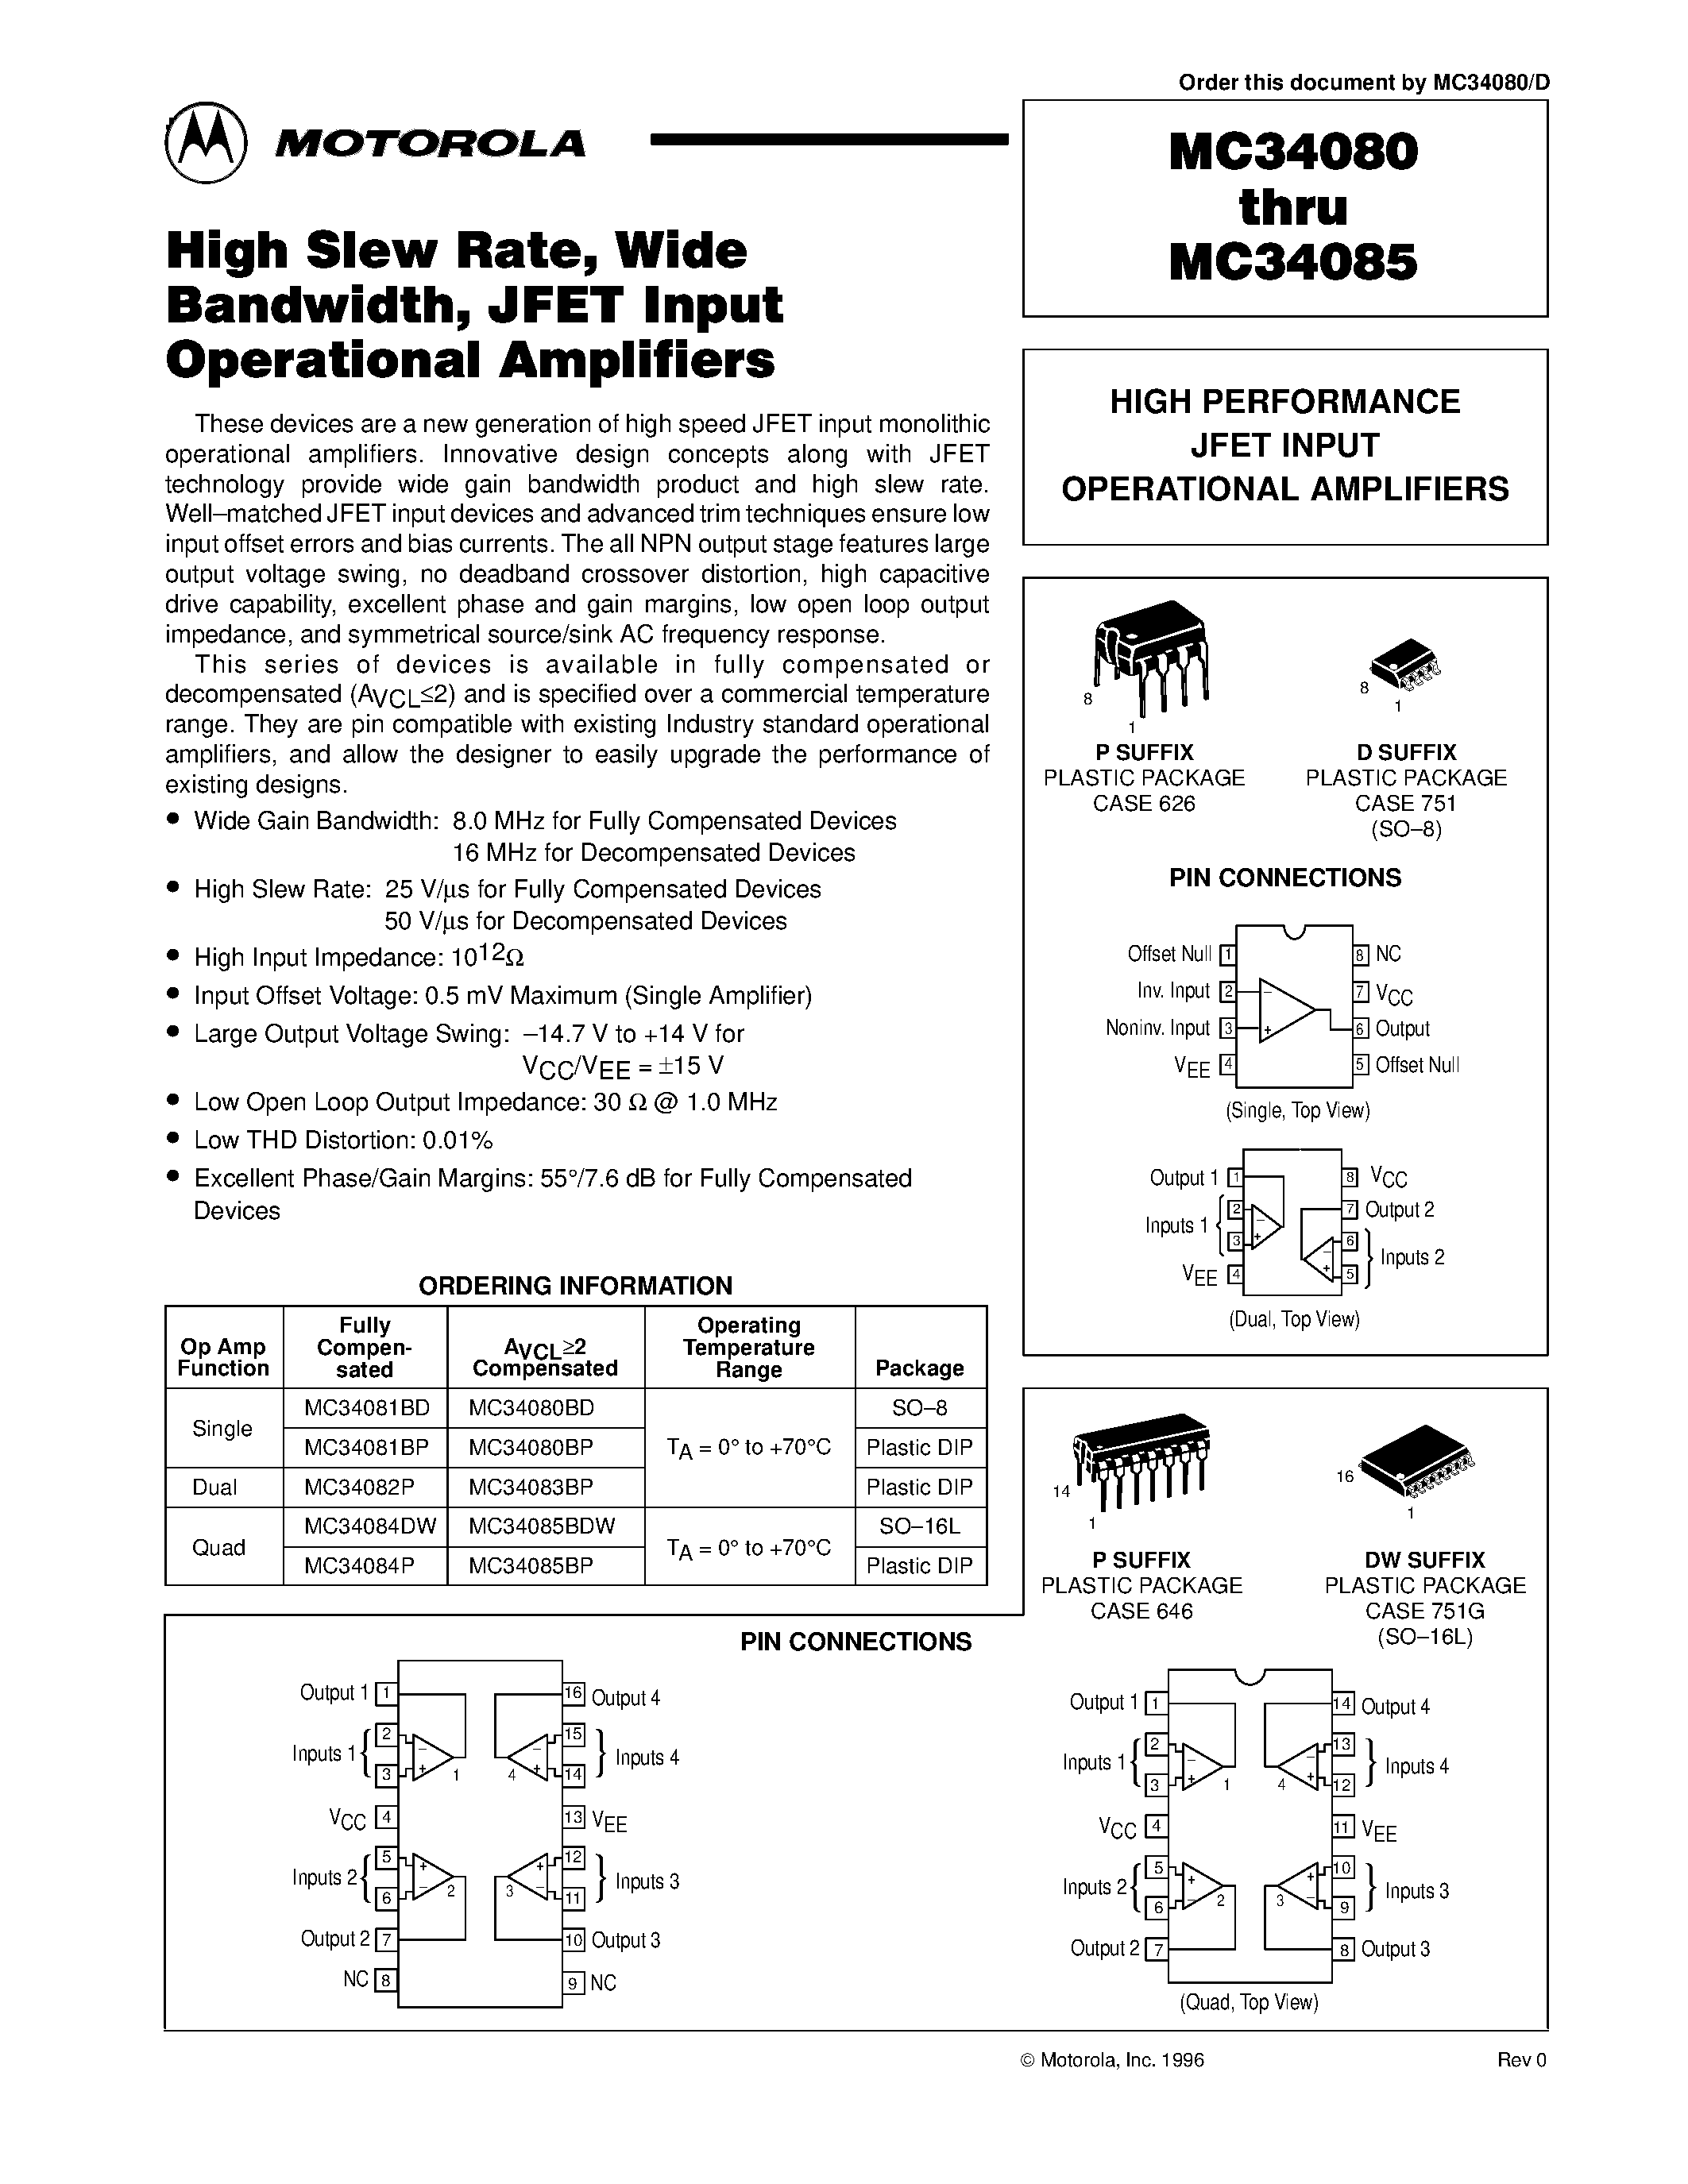 Datasheet MC34084 - (MC34080 - MC34085) HIGH SLEW RATE WIDE BANDWIDTH JFET INPUT OPERATIONAL AMPLIFIERS page 1